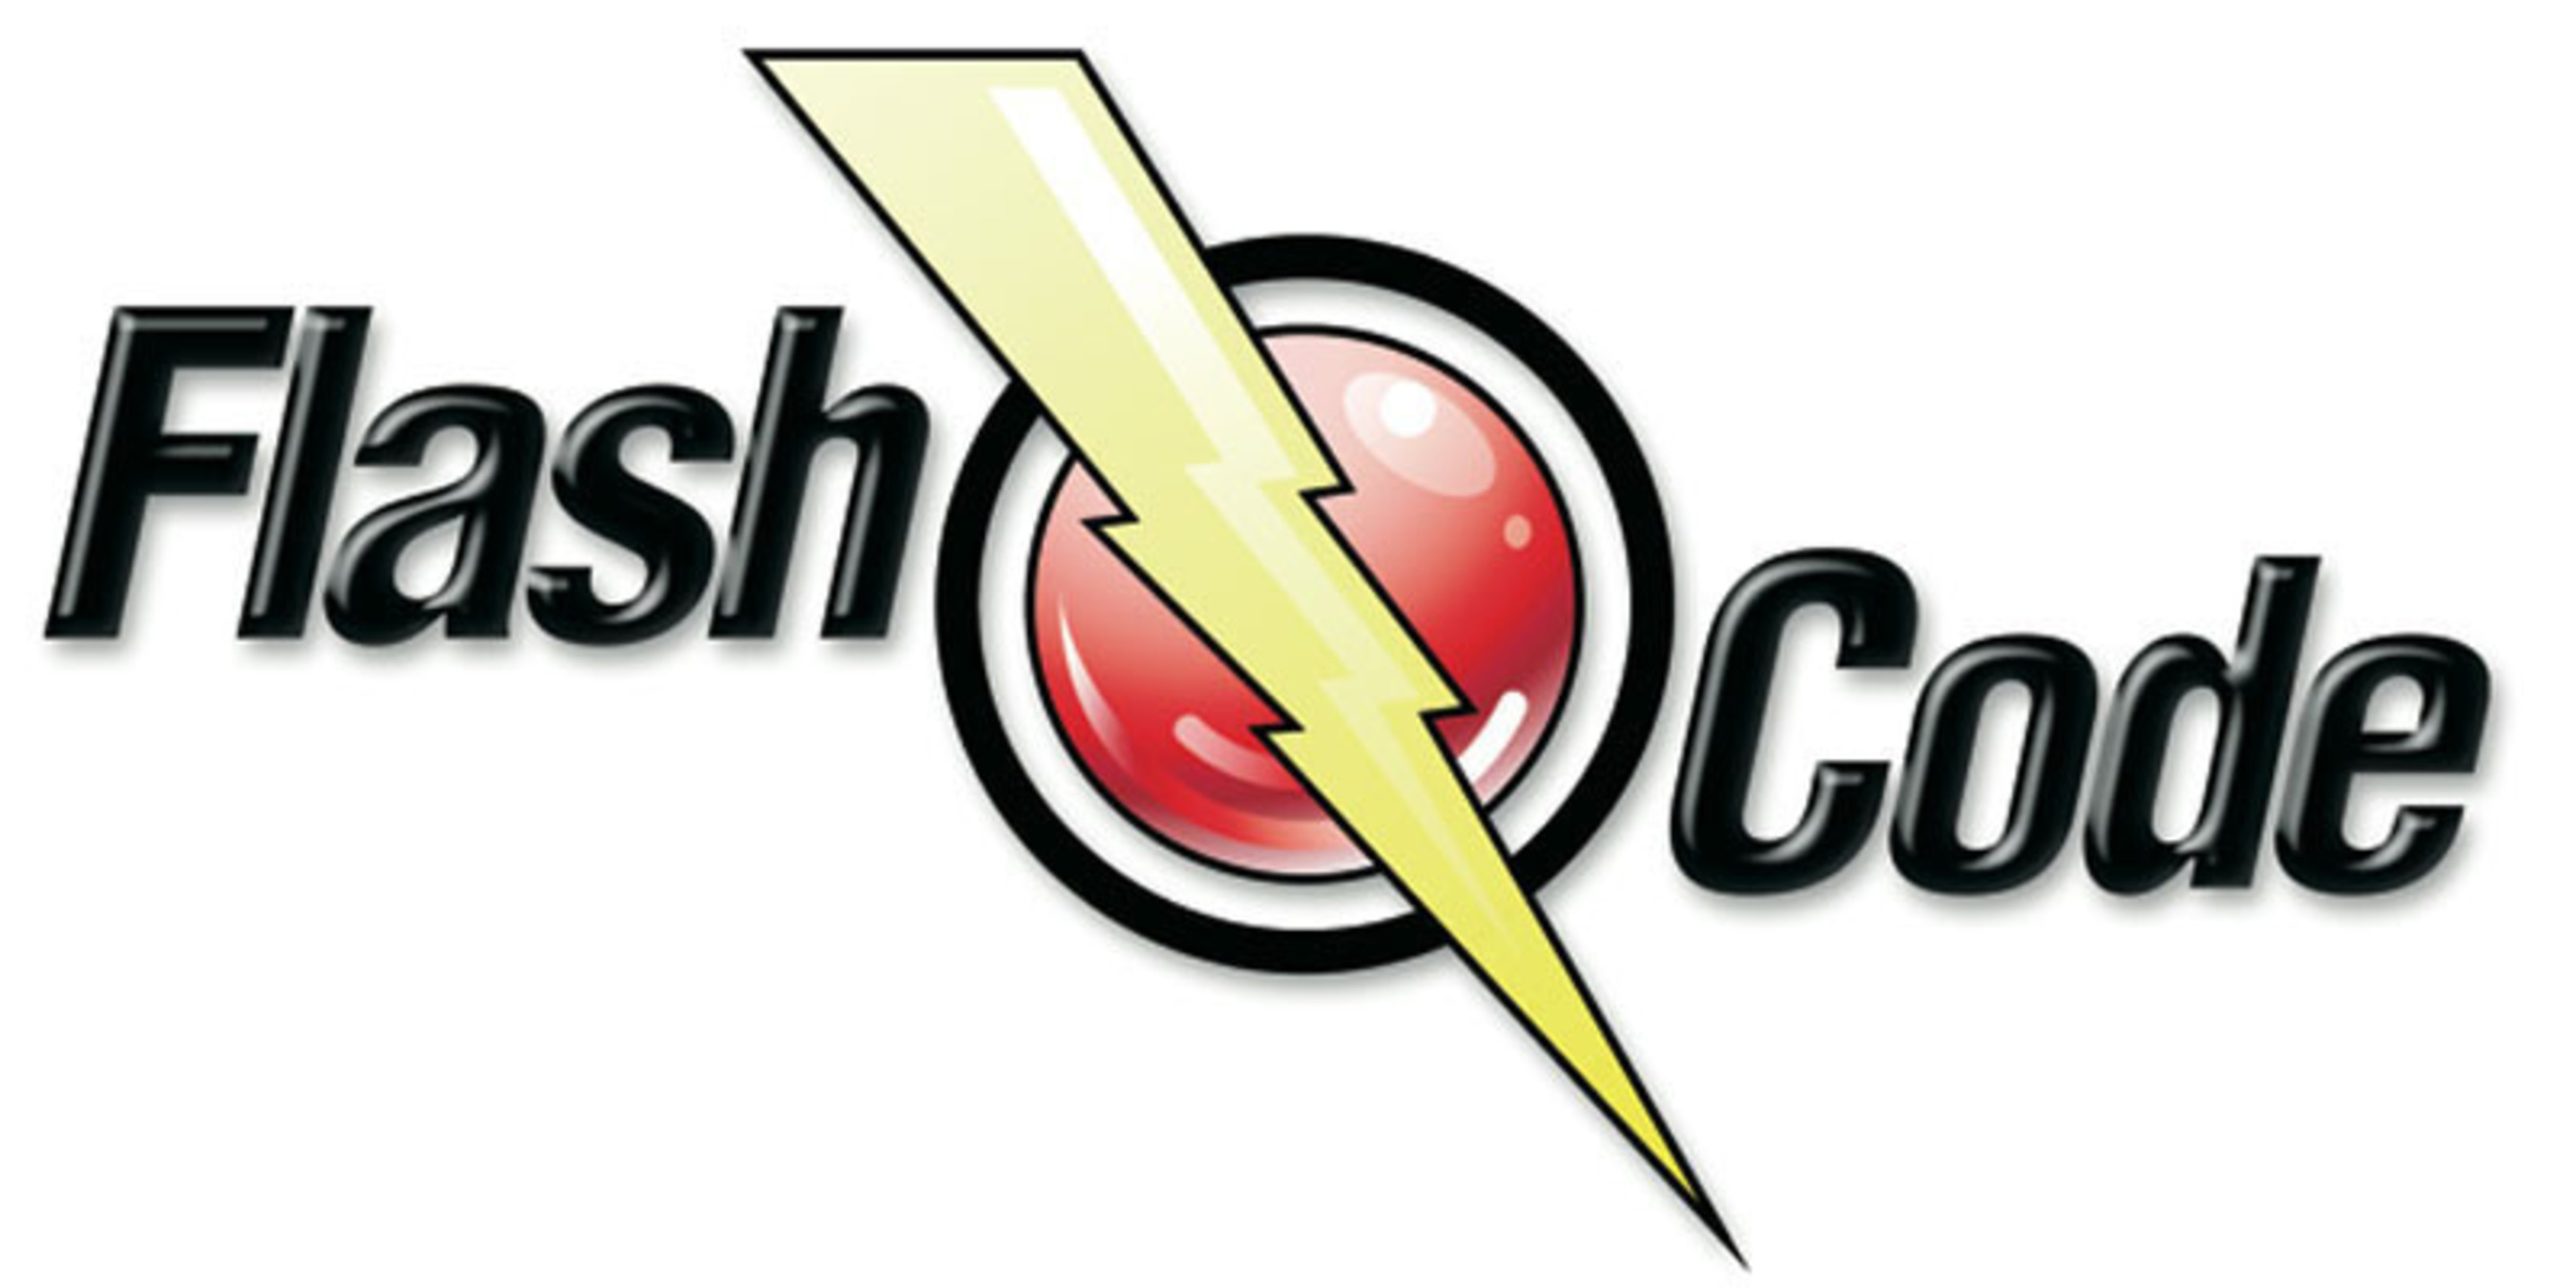 Flash Code logo. (PRNewsFoto/MacPractice, Inc.) (PRNewsFoto/MACPRACTICE, INC.)